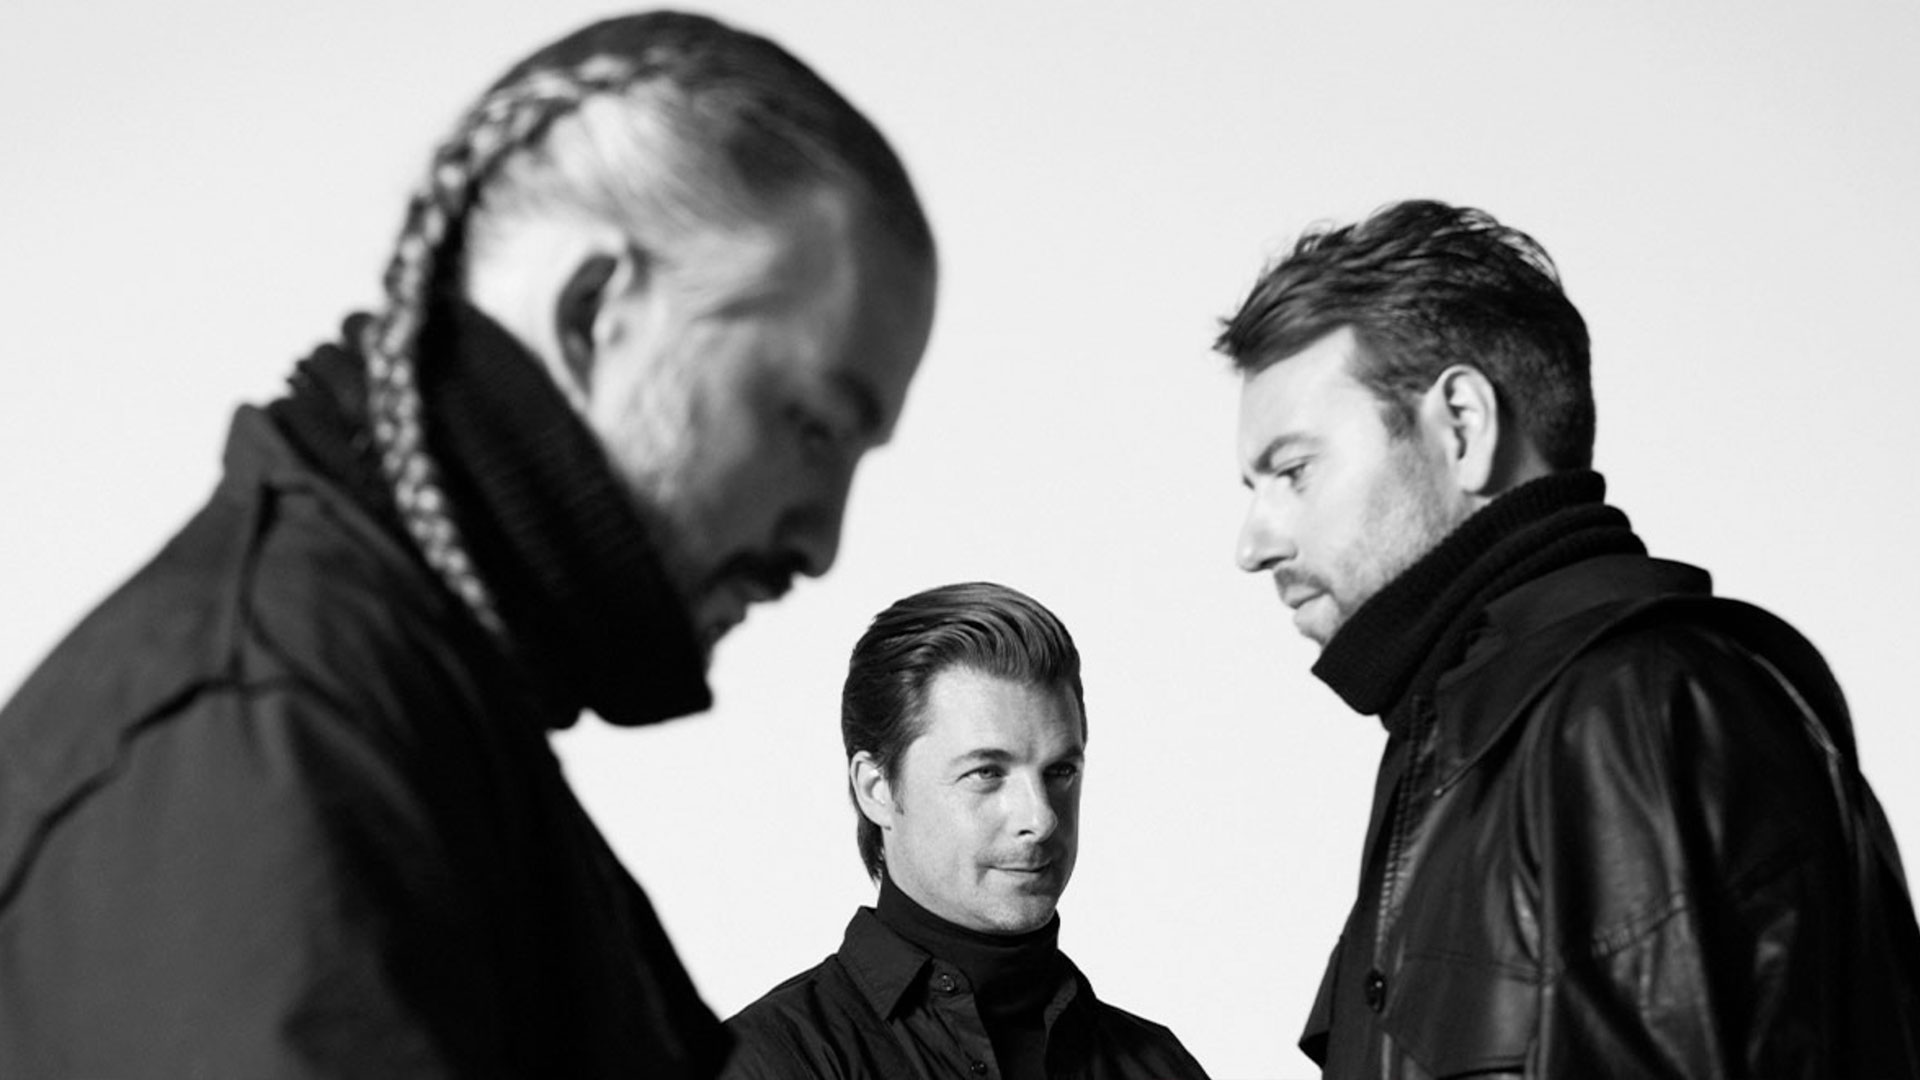 Swedish DJs & producers trio The Swedish House Mafia